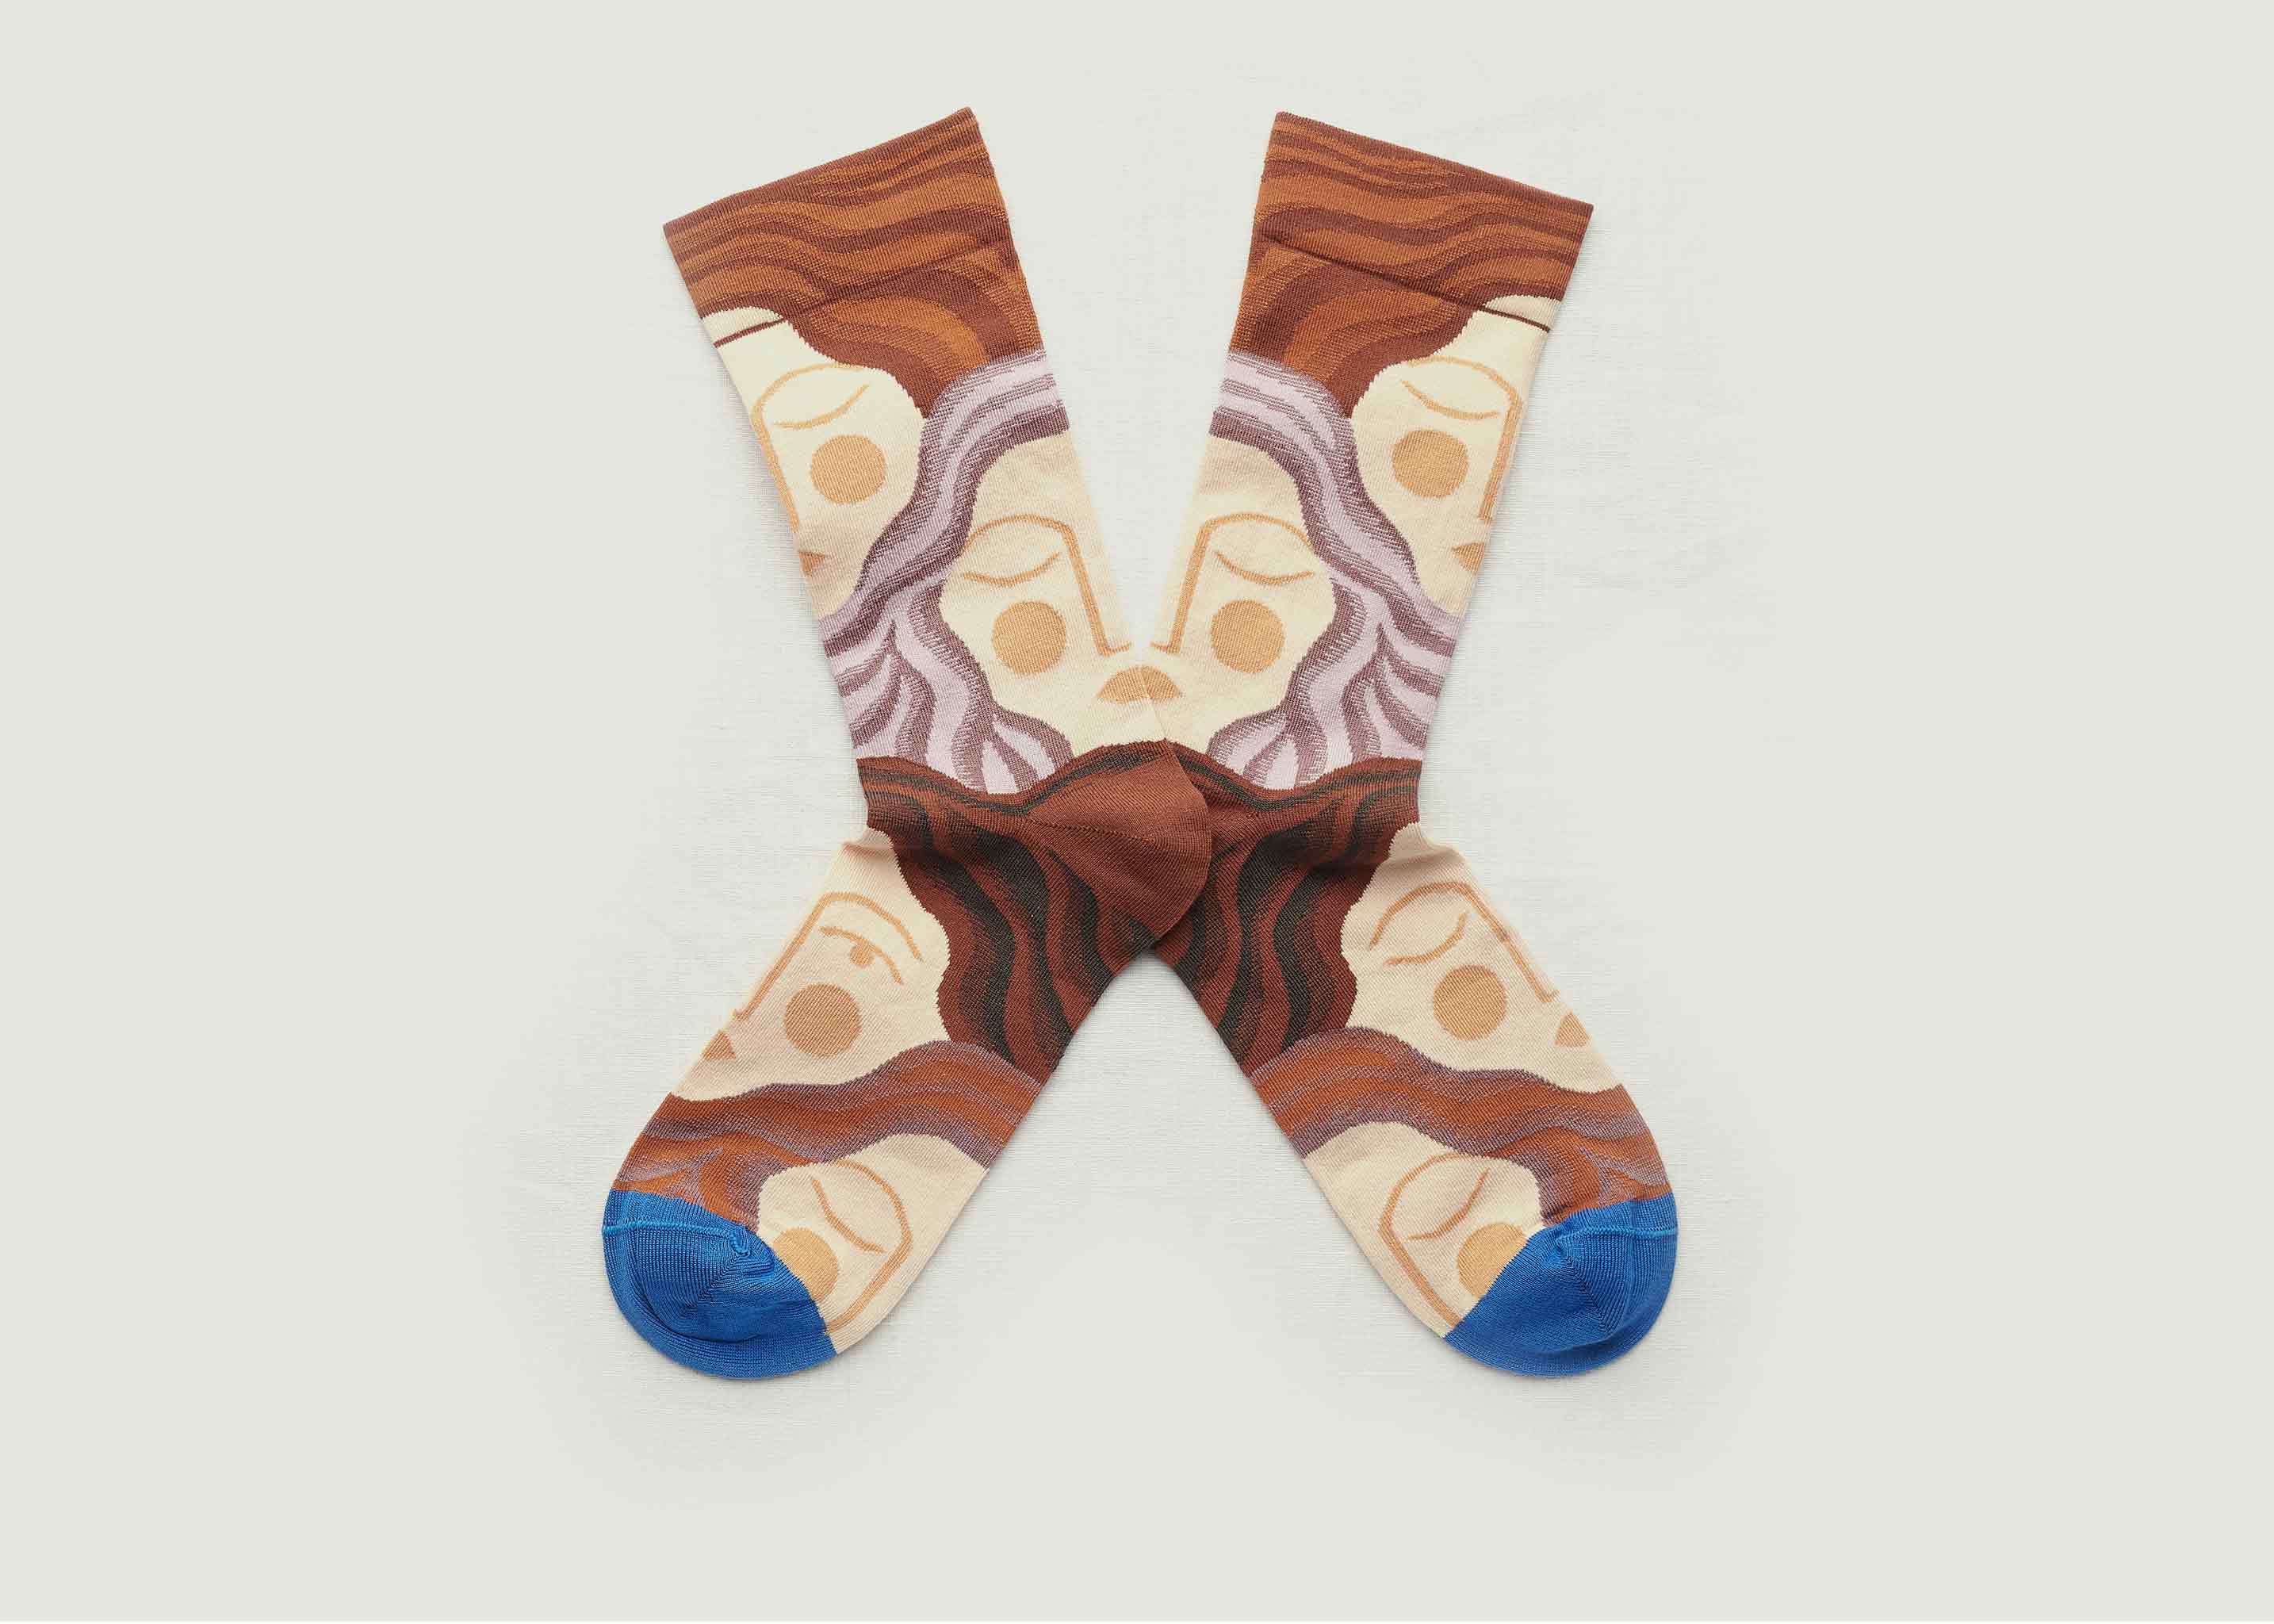 Sleeping women pattern socks with contrasting tip - Bonne Maison